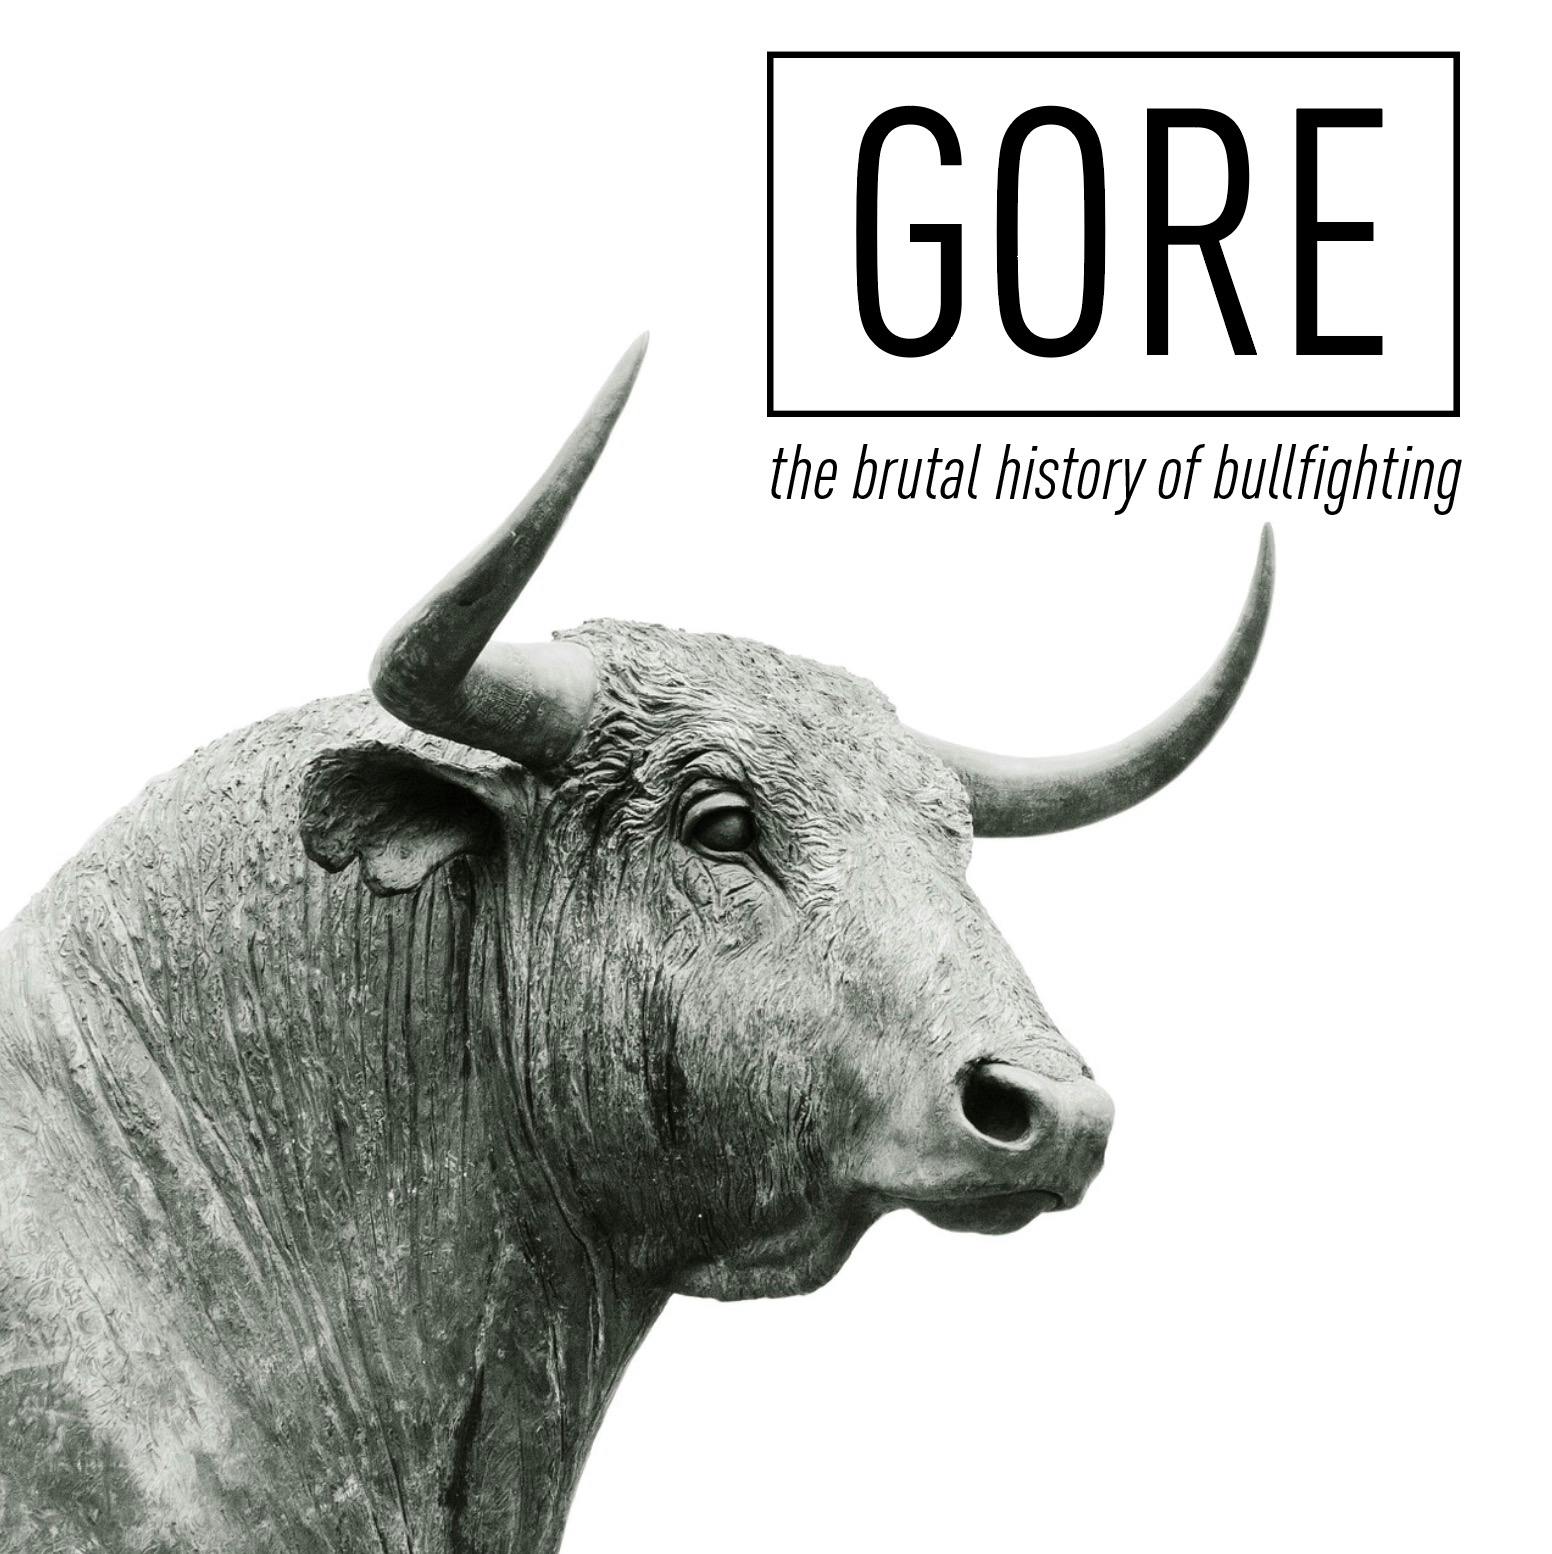 Gore: The Brutal History of Bullfighting Image